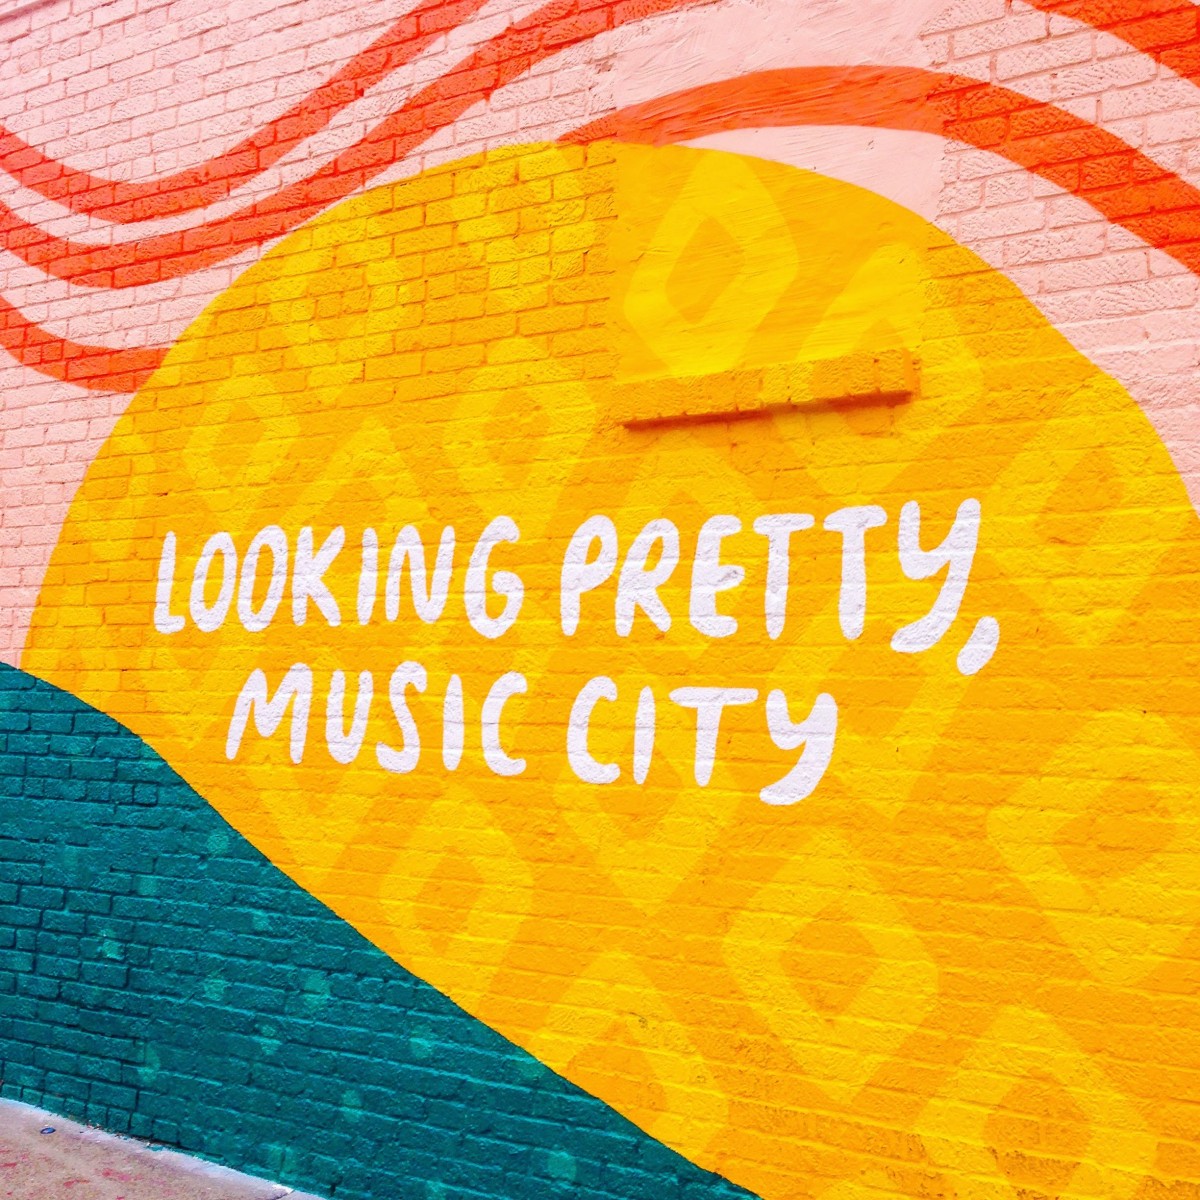 12th South Nashville Tennesse USA street art mural music city